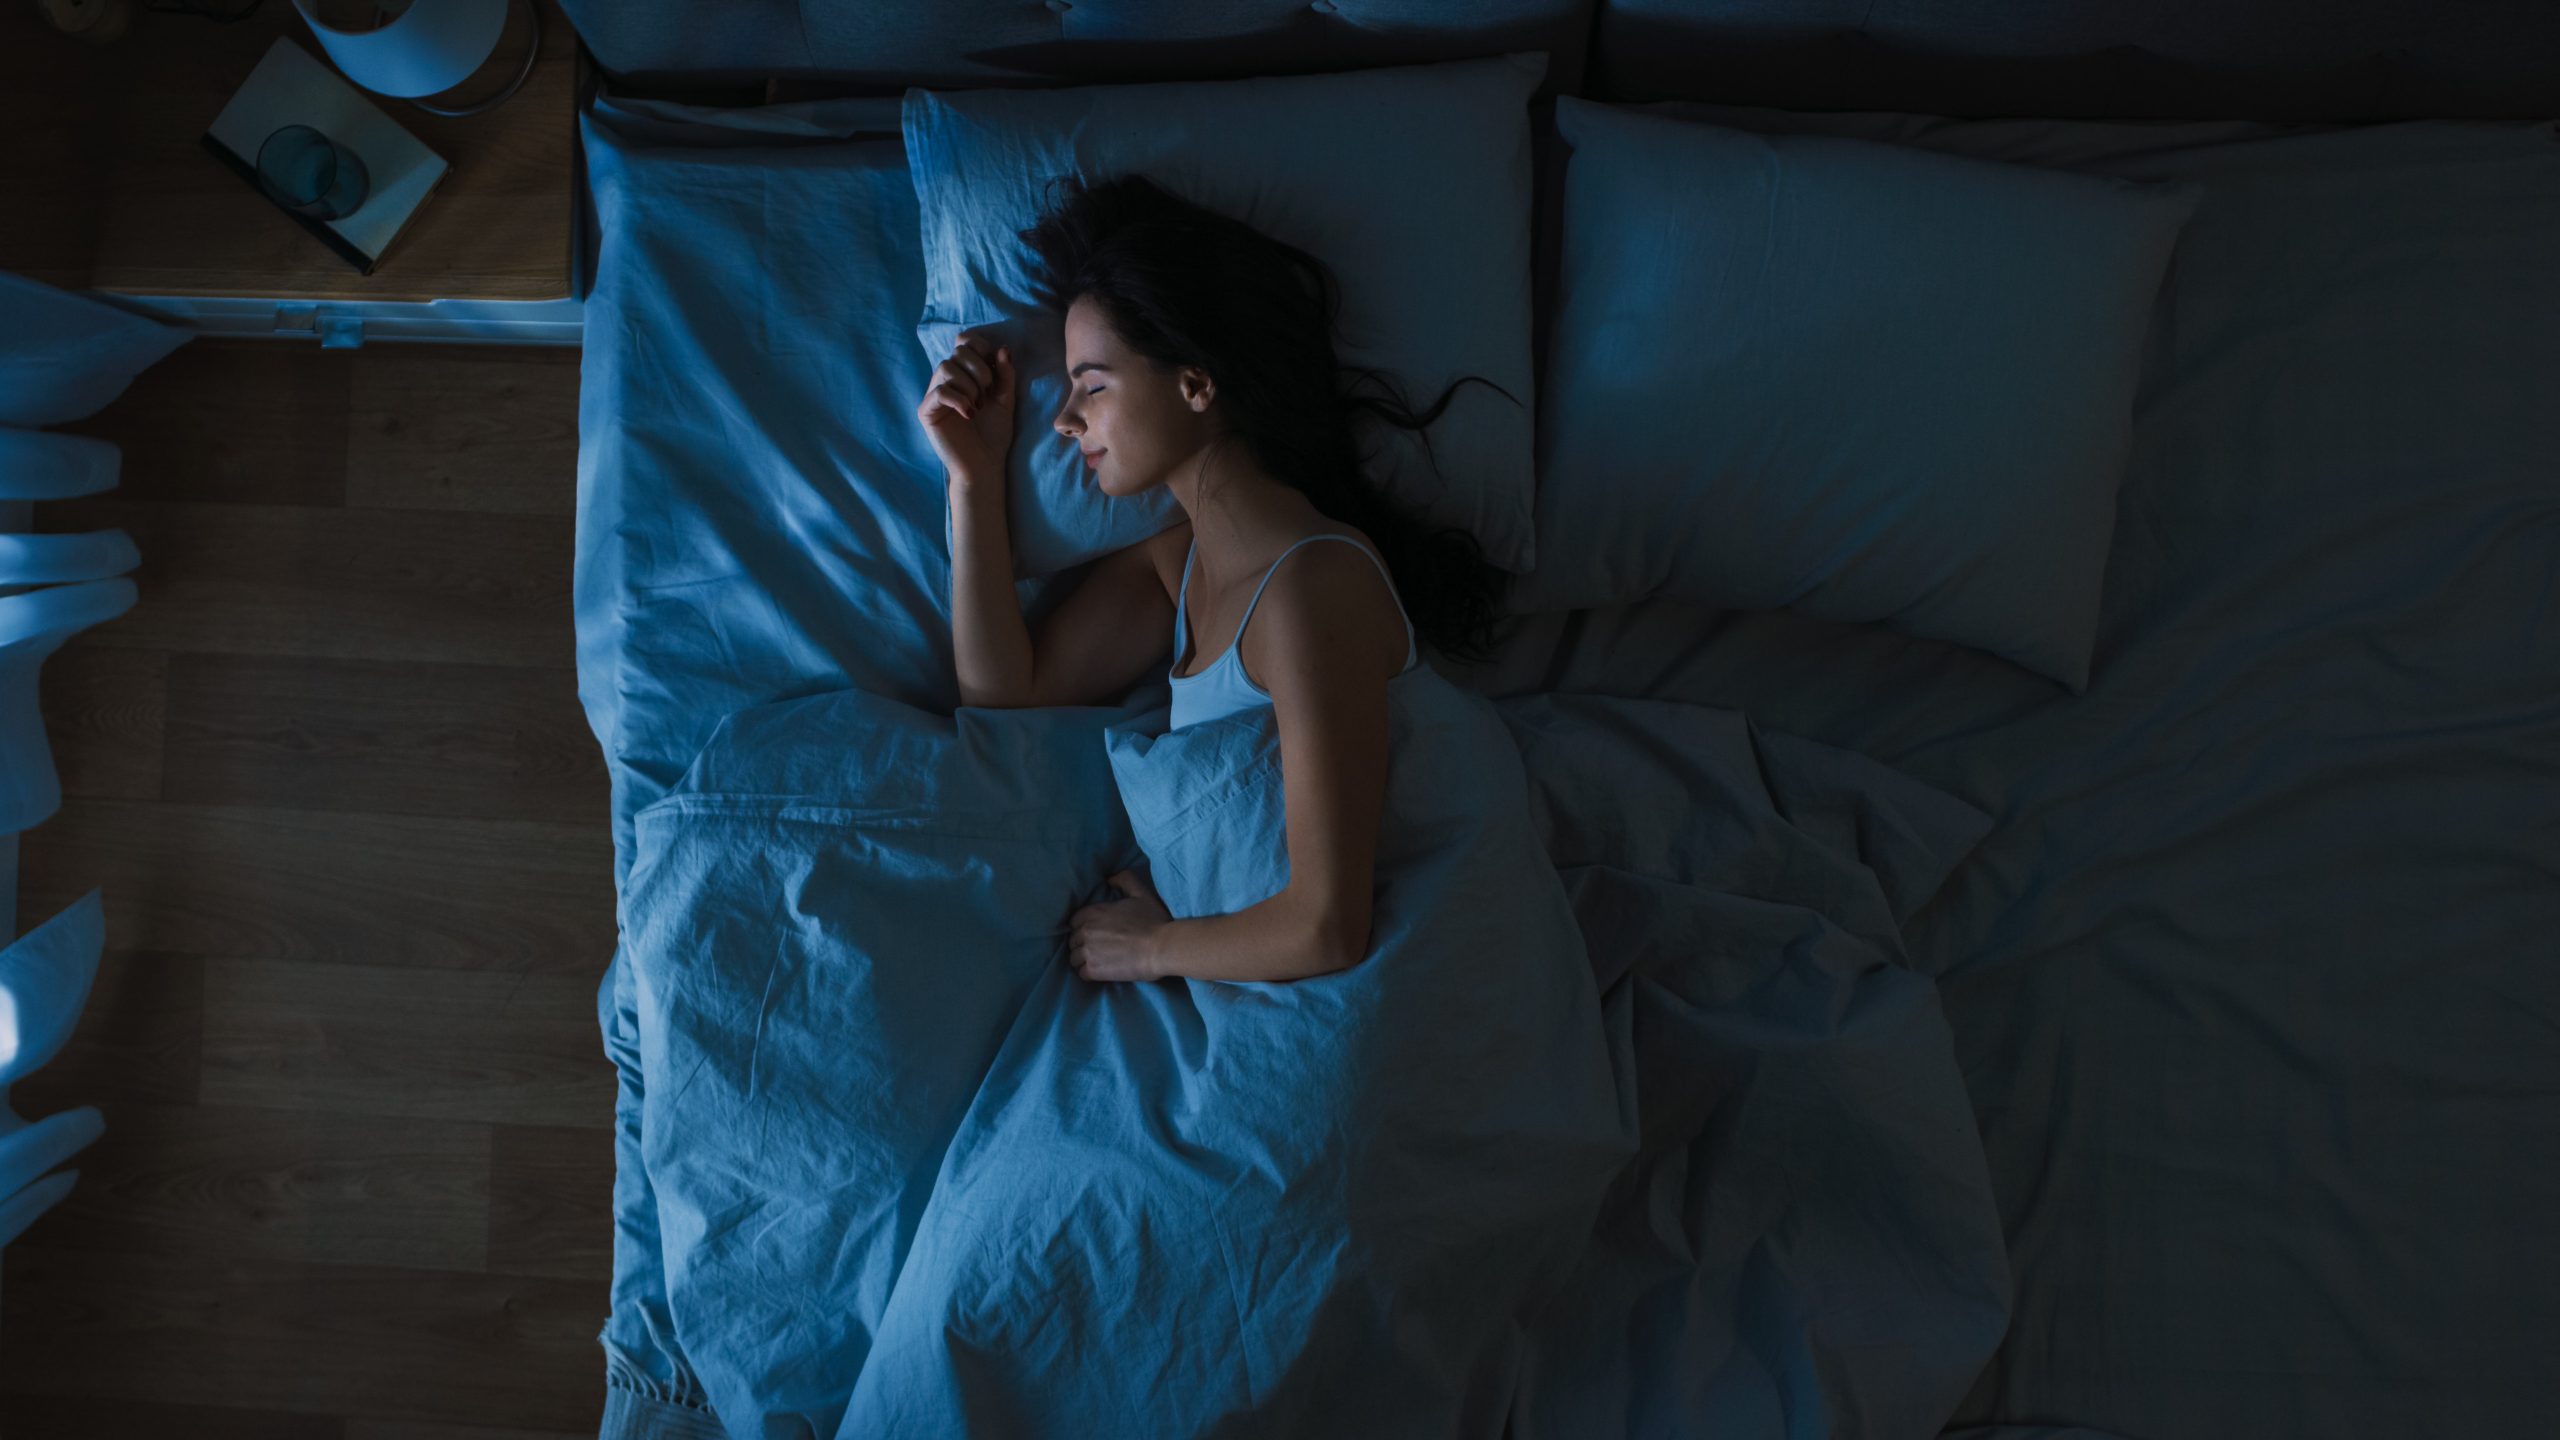 How does sleep impact health?